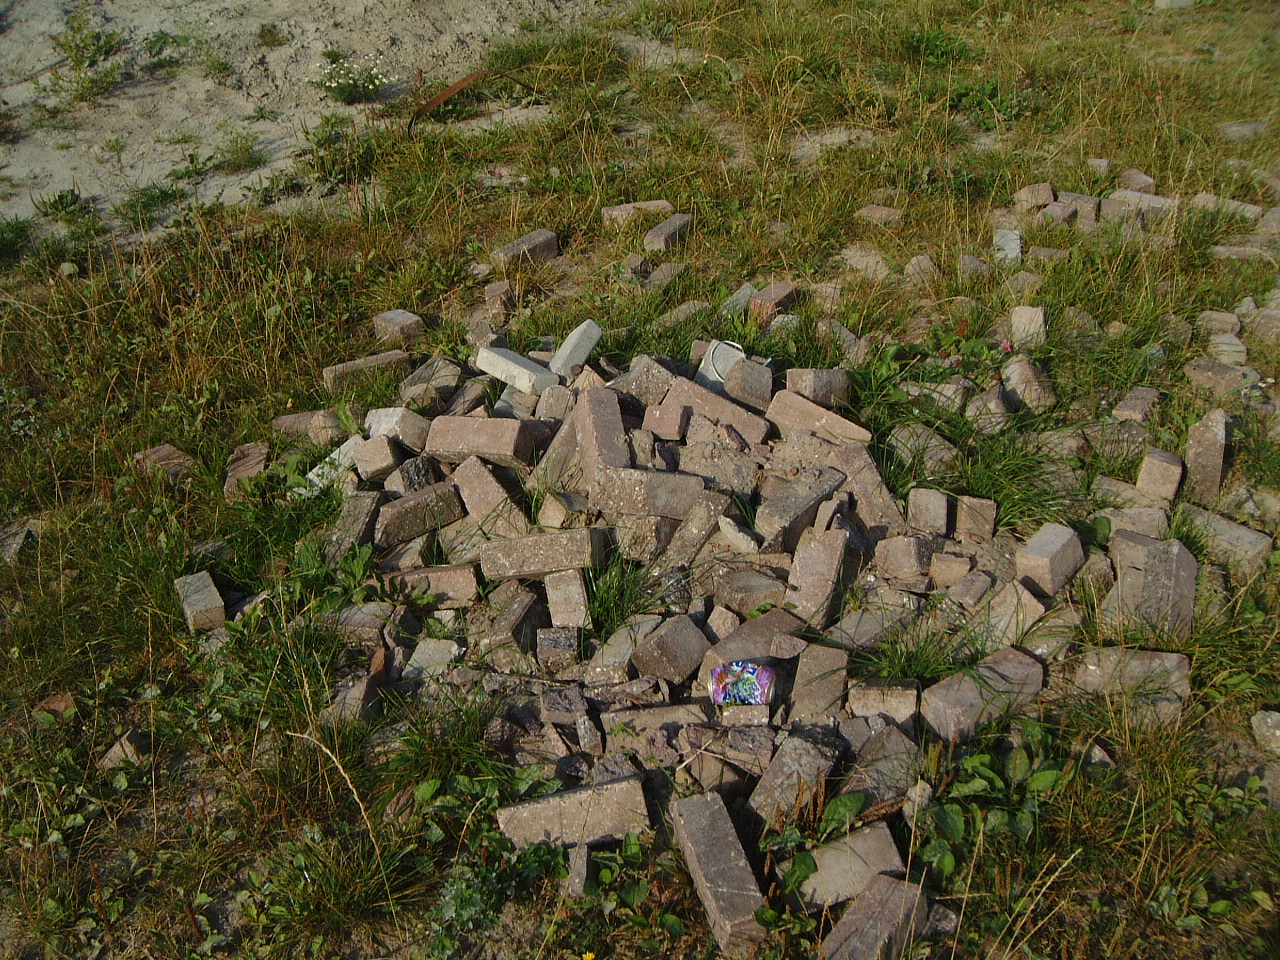 maartent pile of bricks in a field grass soda can littering